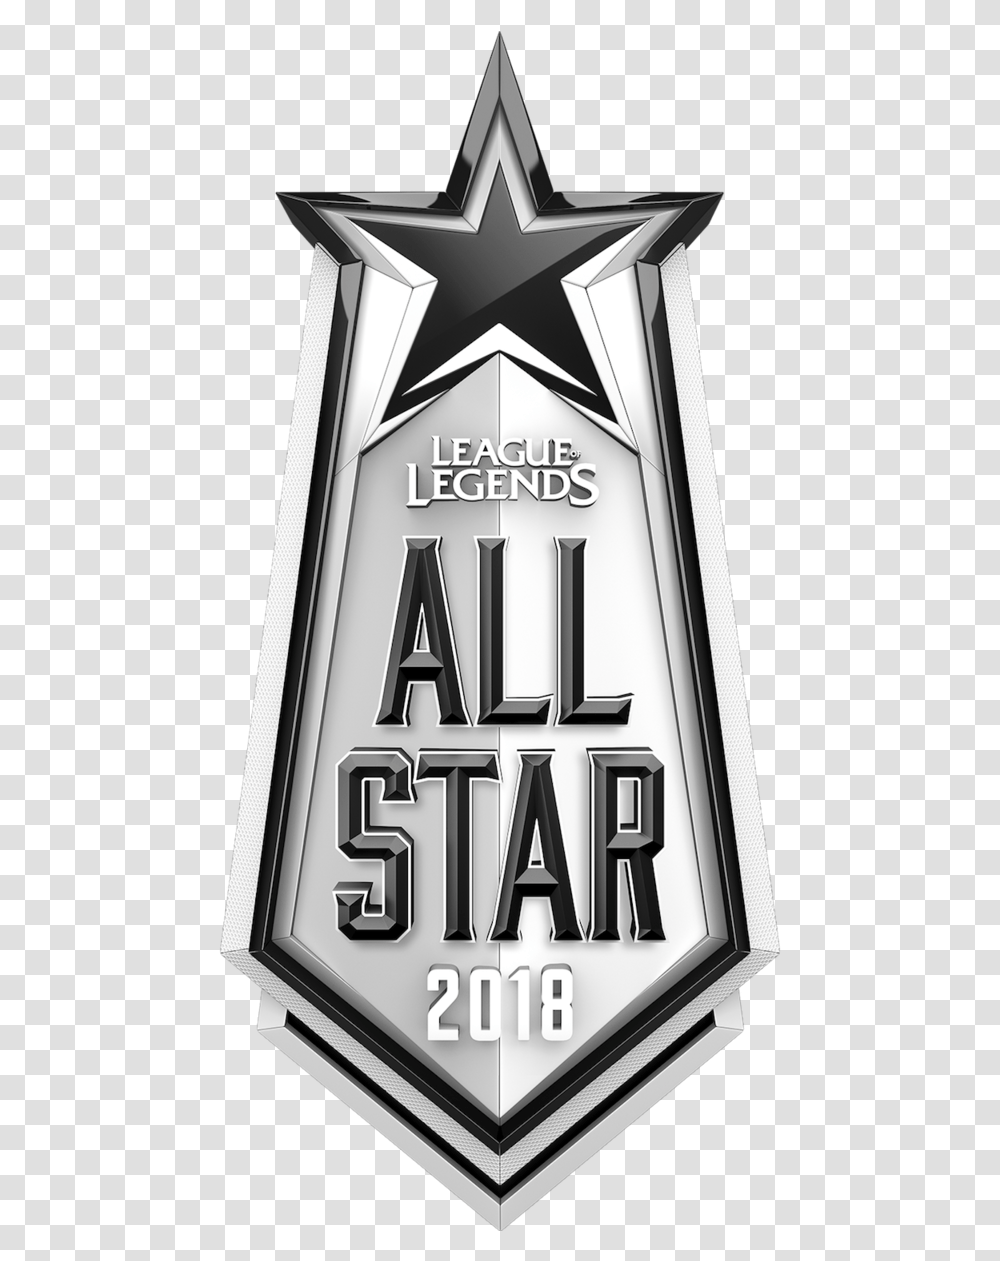 All Star 2018 Las Vegas Leaguepedia League Of Legends All Star Las Vegas, Liquor, Alcohol, Beverage, Drink Transparent Png